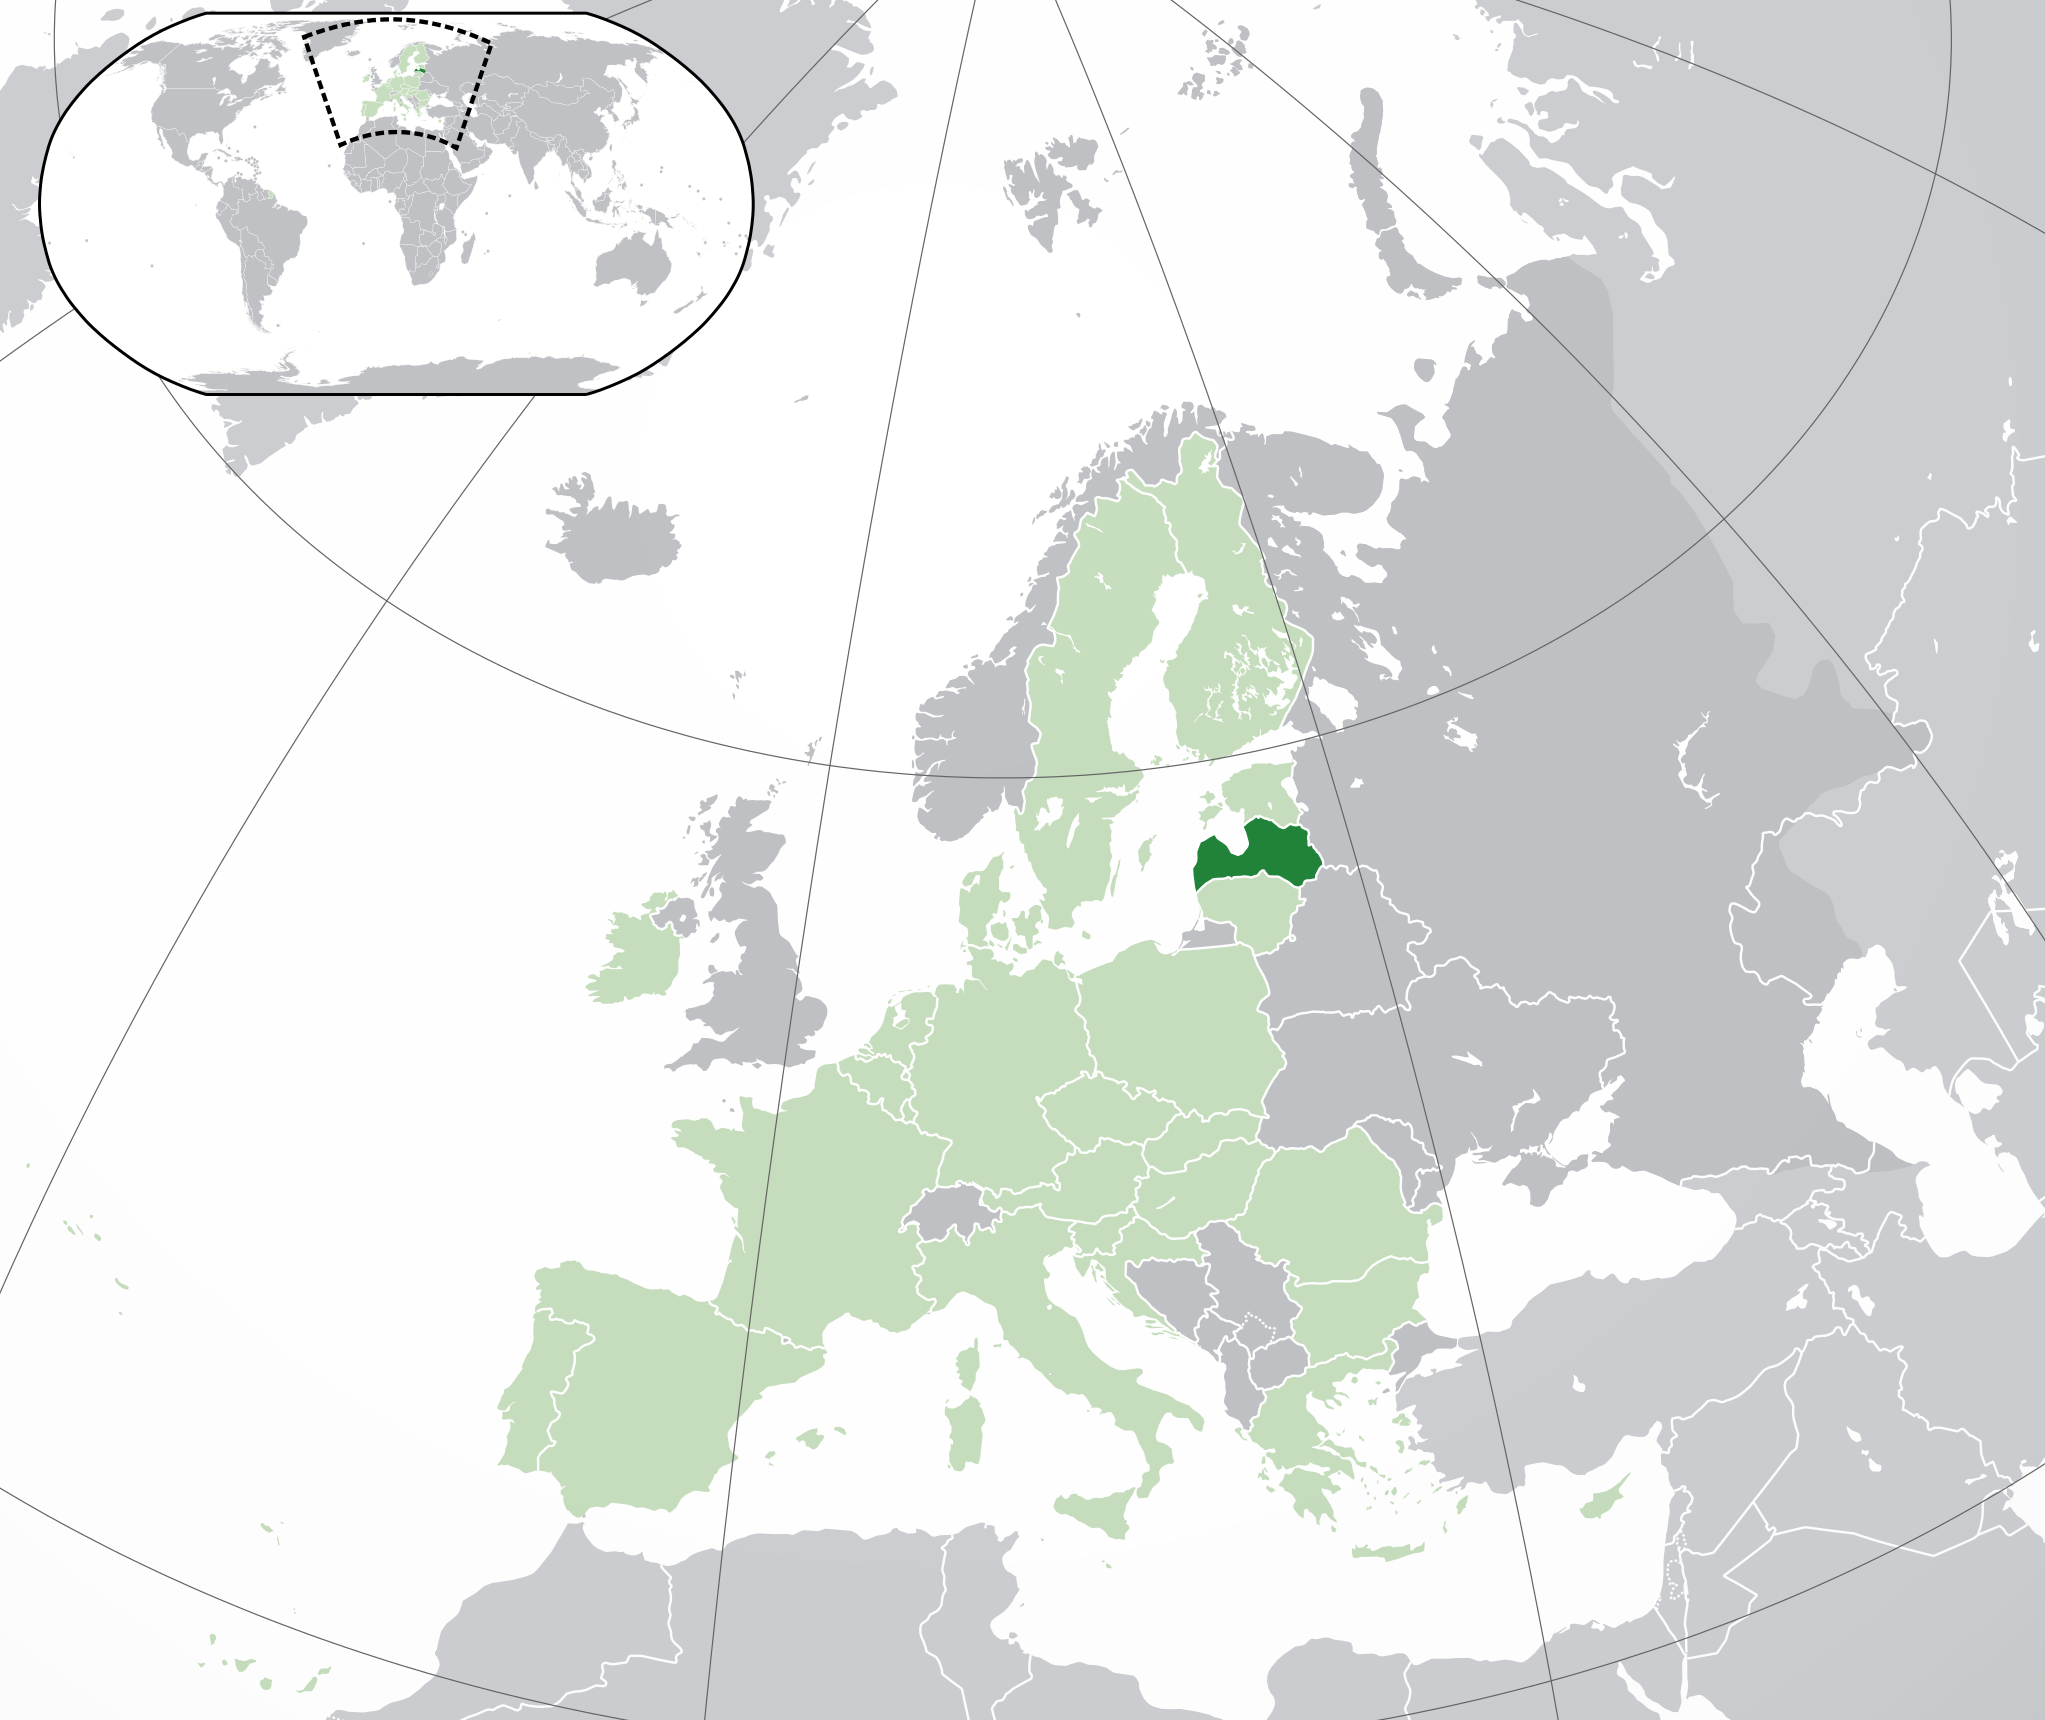 Latvia (dark green) in the European Union (light green)